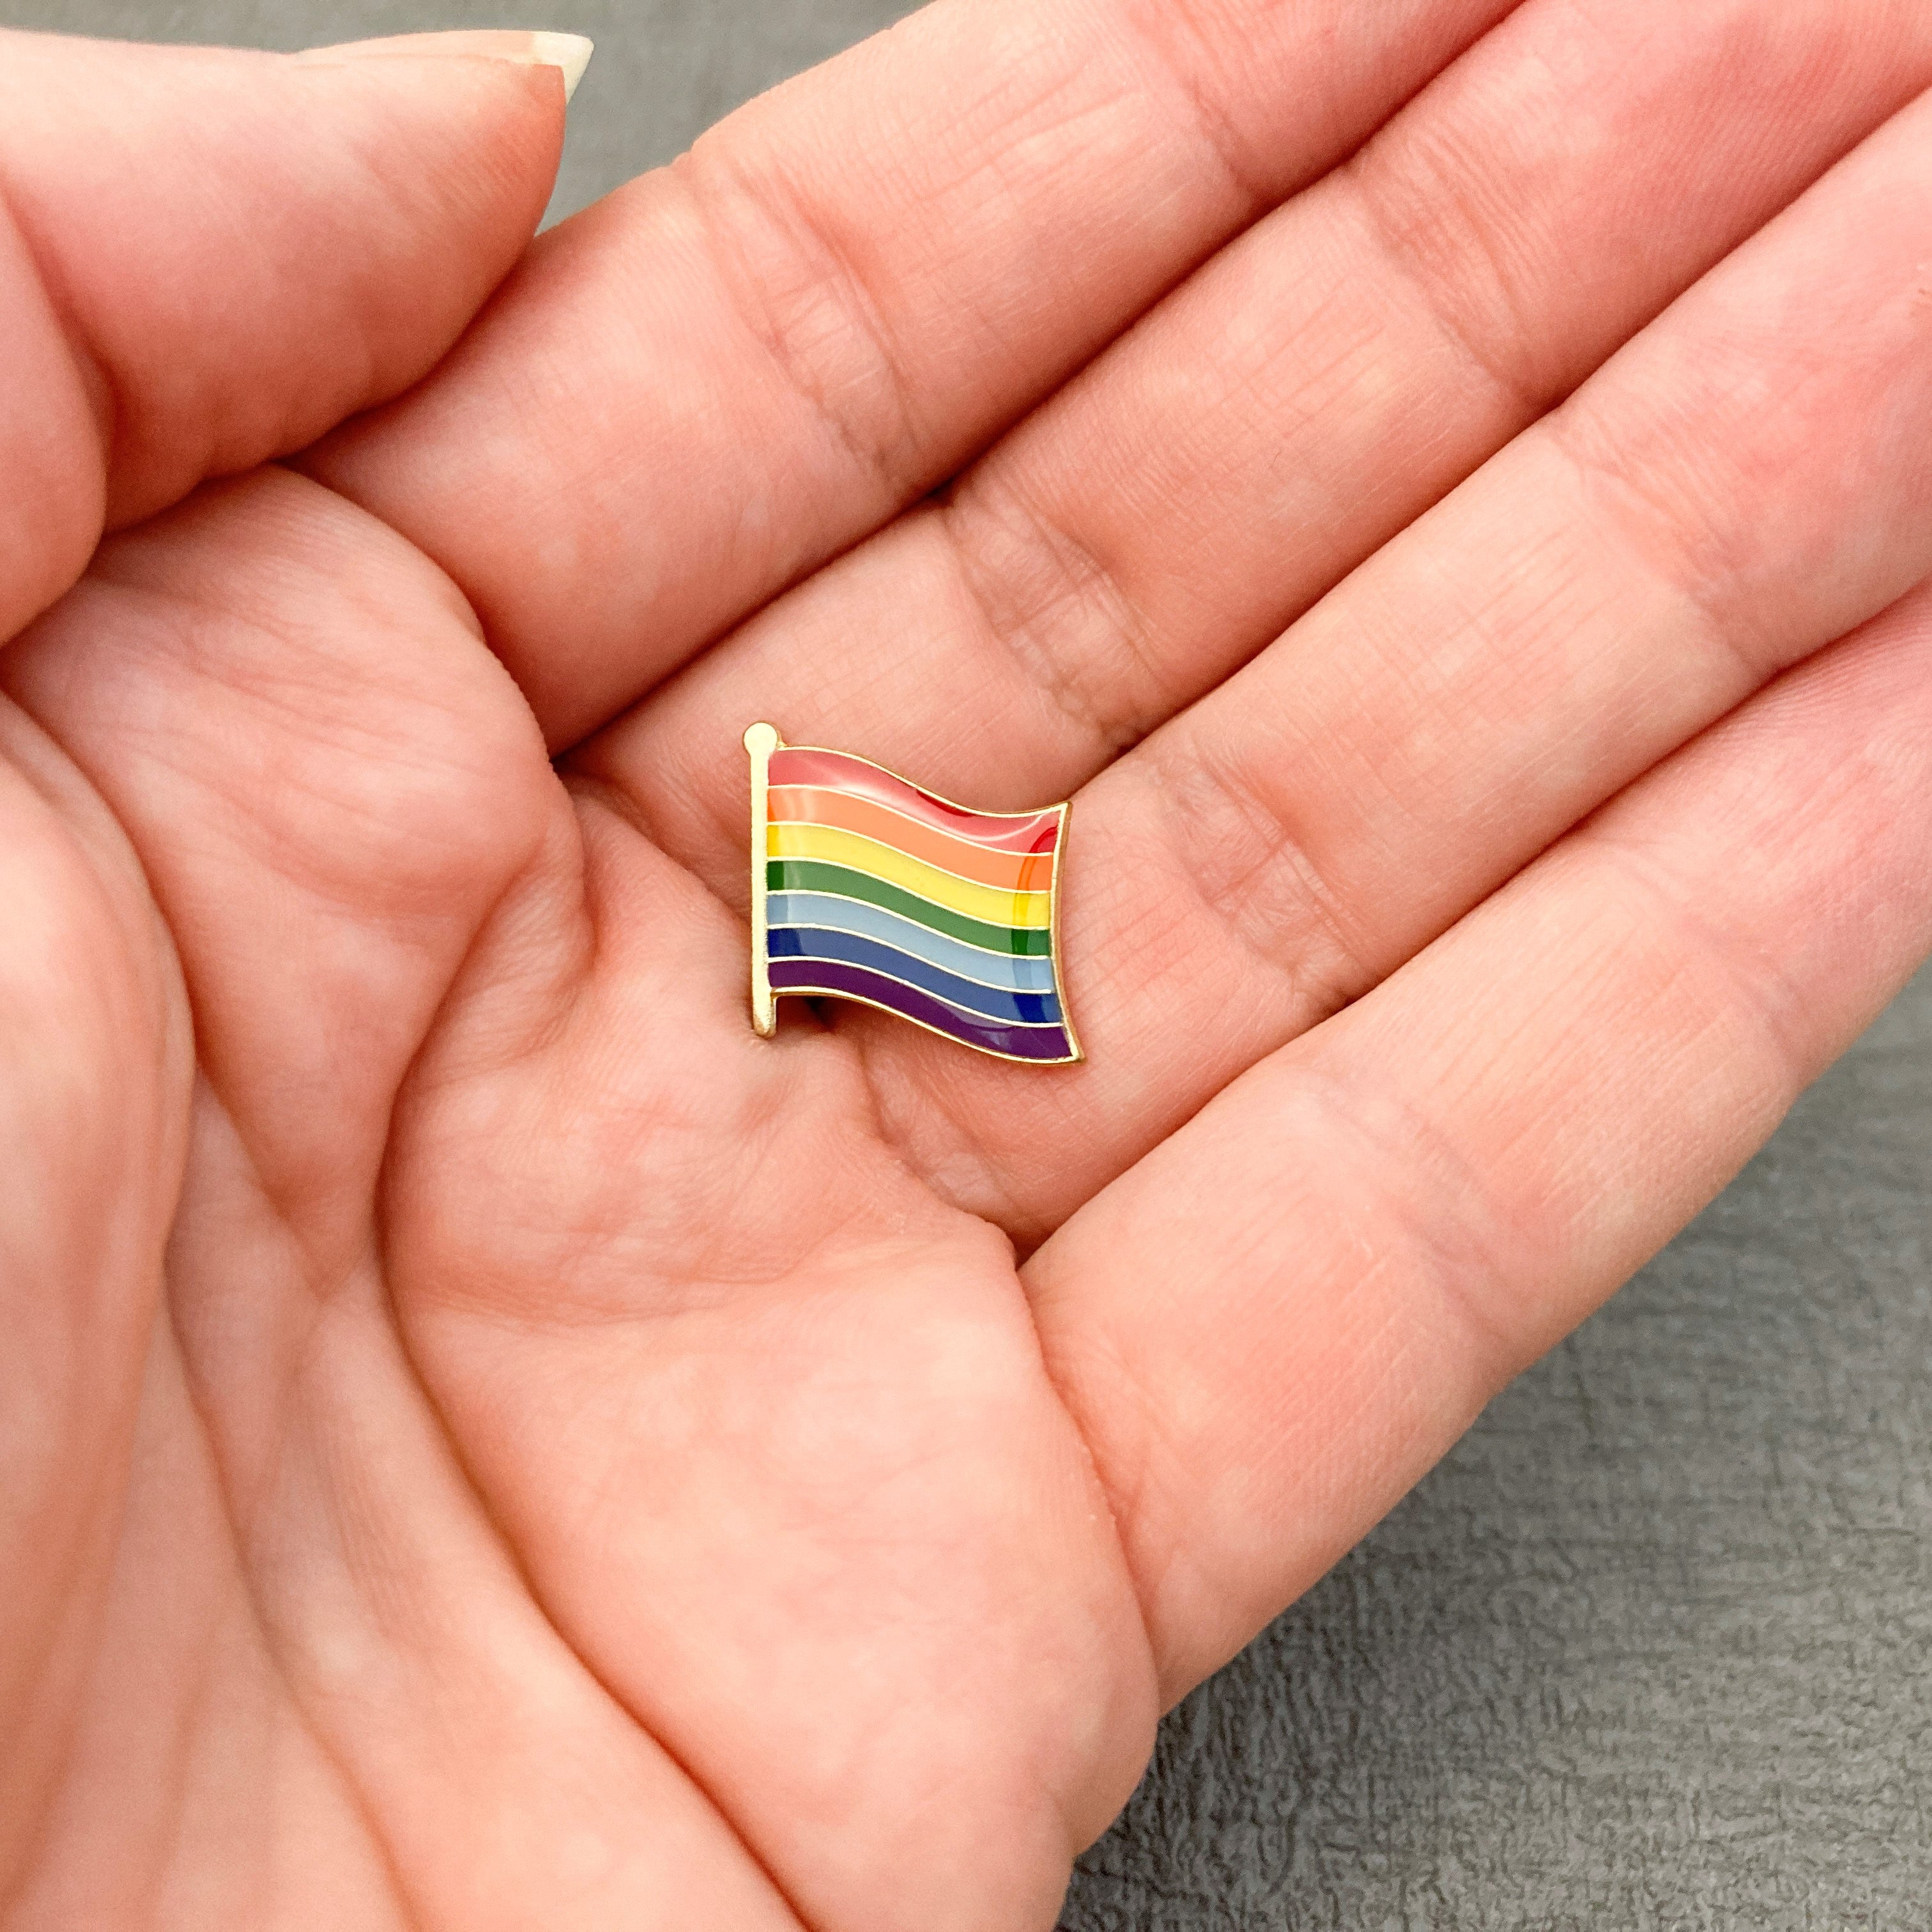 lgbt pride flag pins gay rainbow